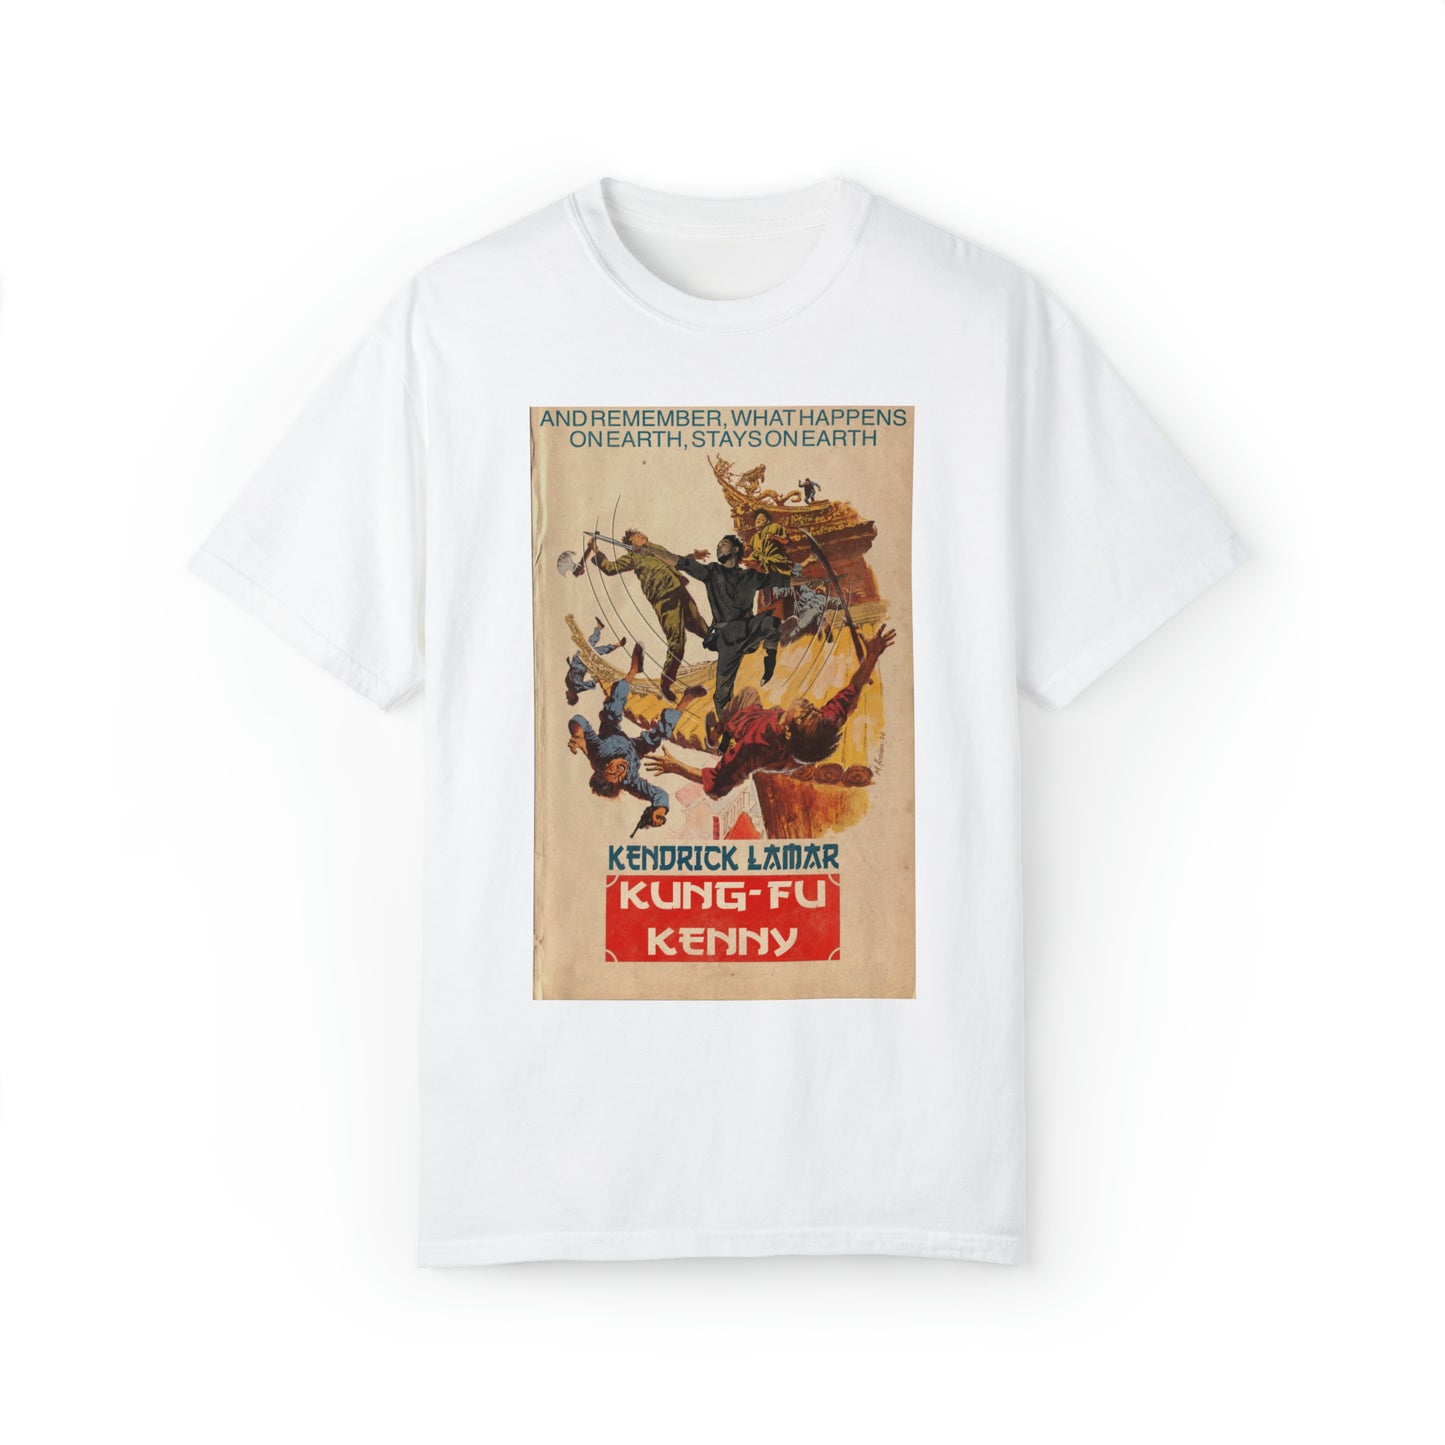 Kendrick Lamar - Kung Fu Kenny - Unisex Comfort Colors T-shirt